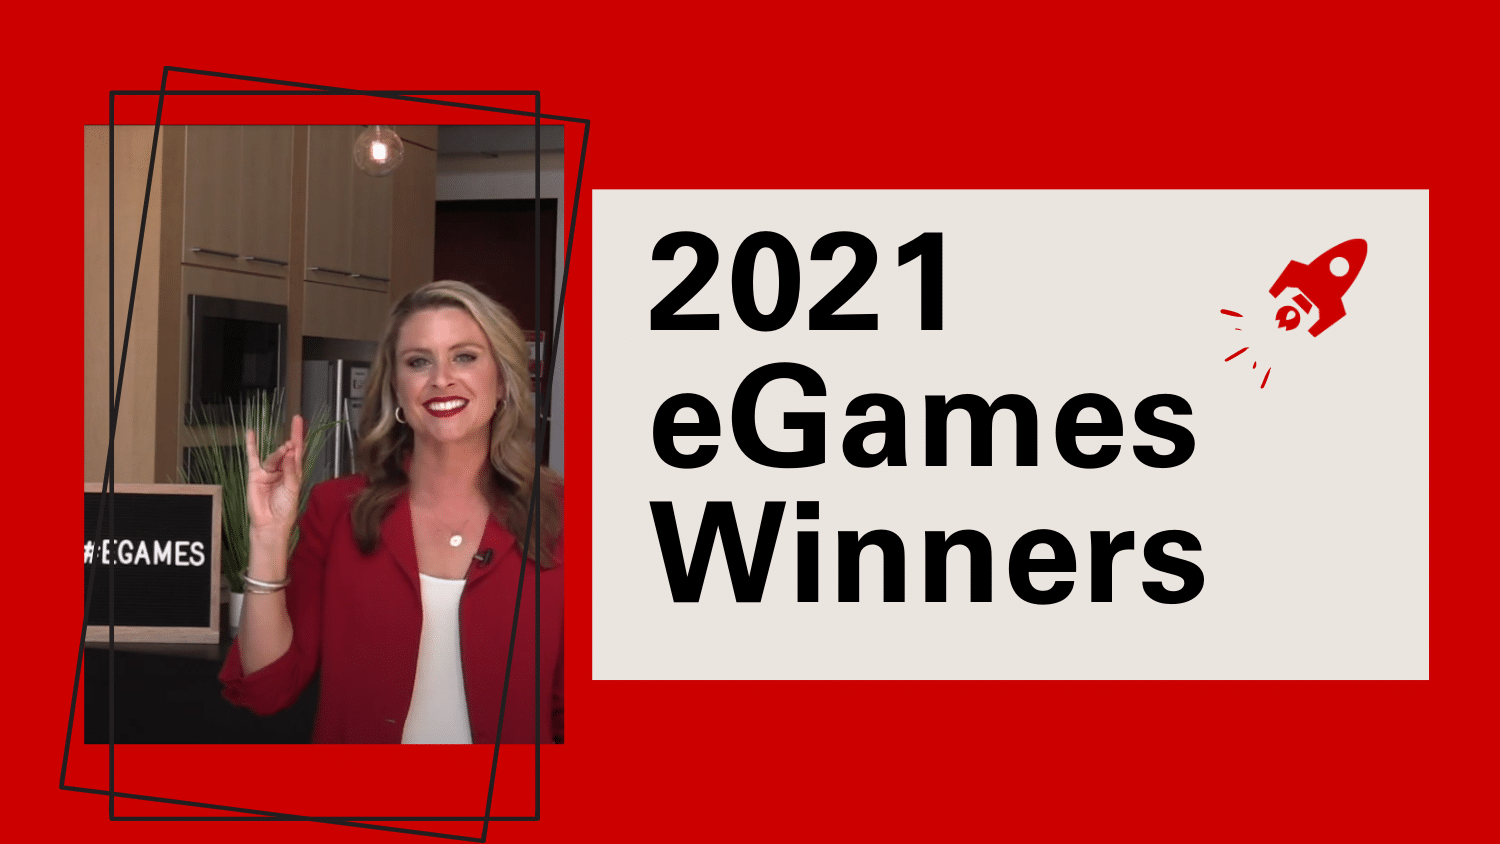 2021 eGames Winners Announced